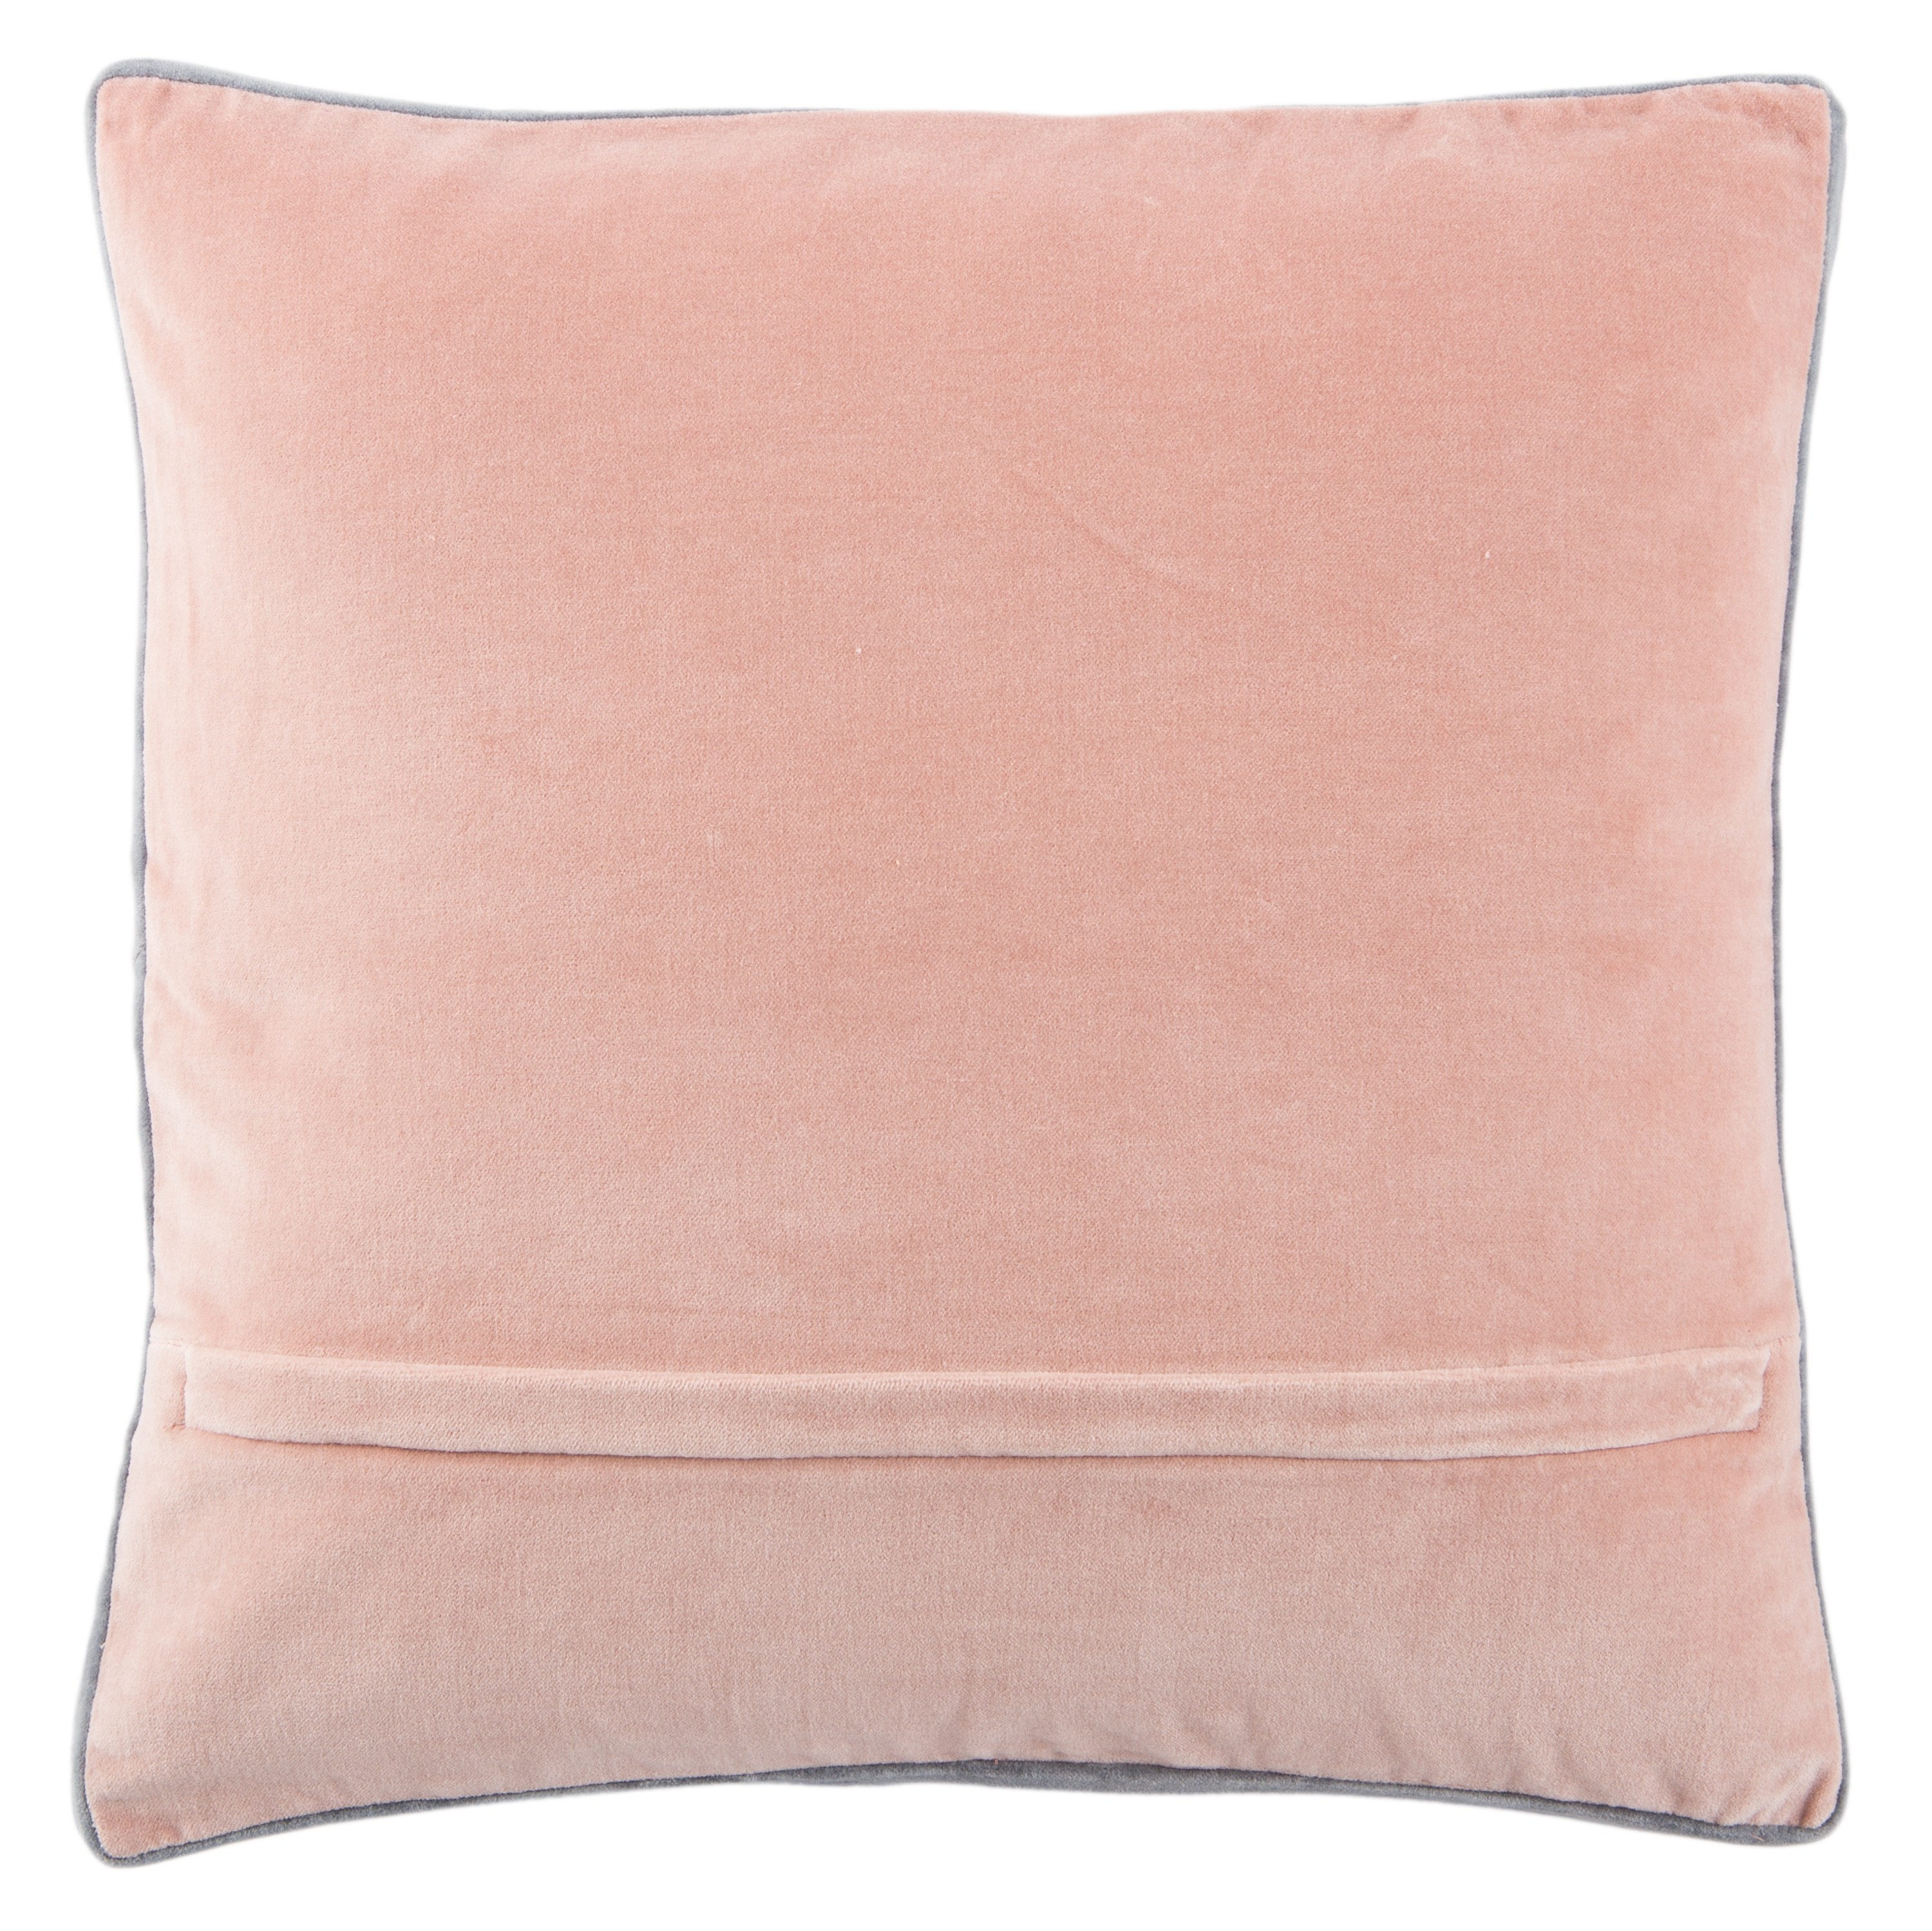 Design (US) Blush 18"X18" Pillow Indoor - Image 1